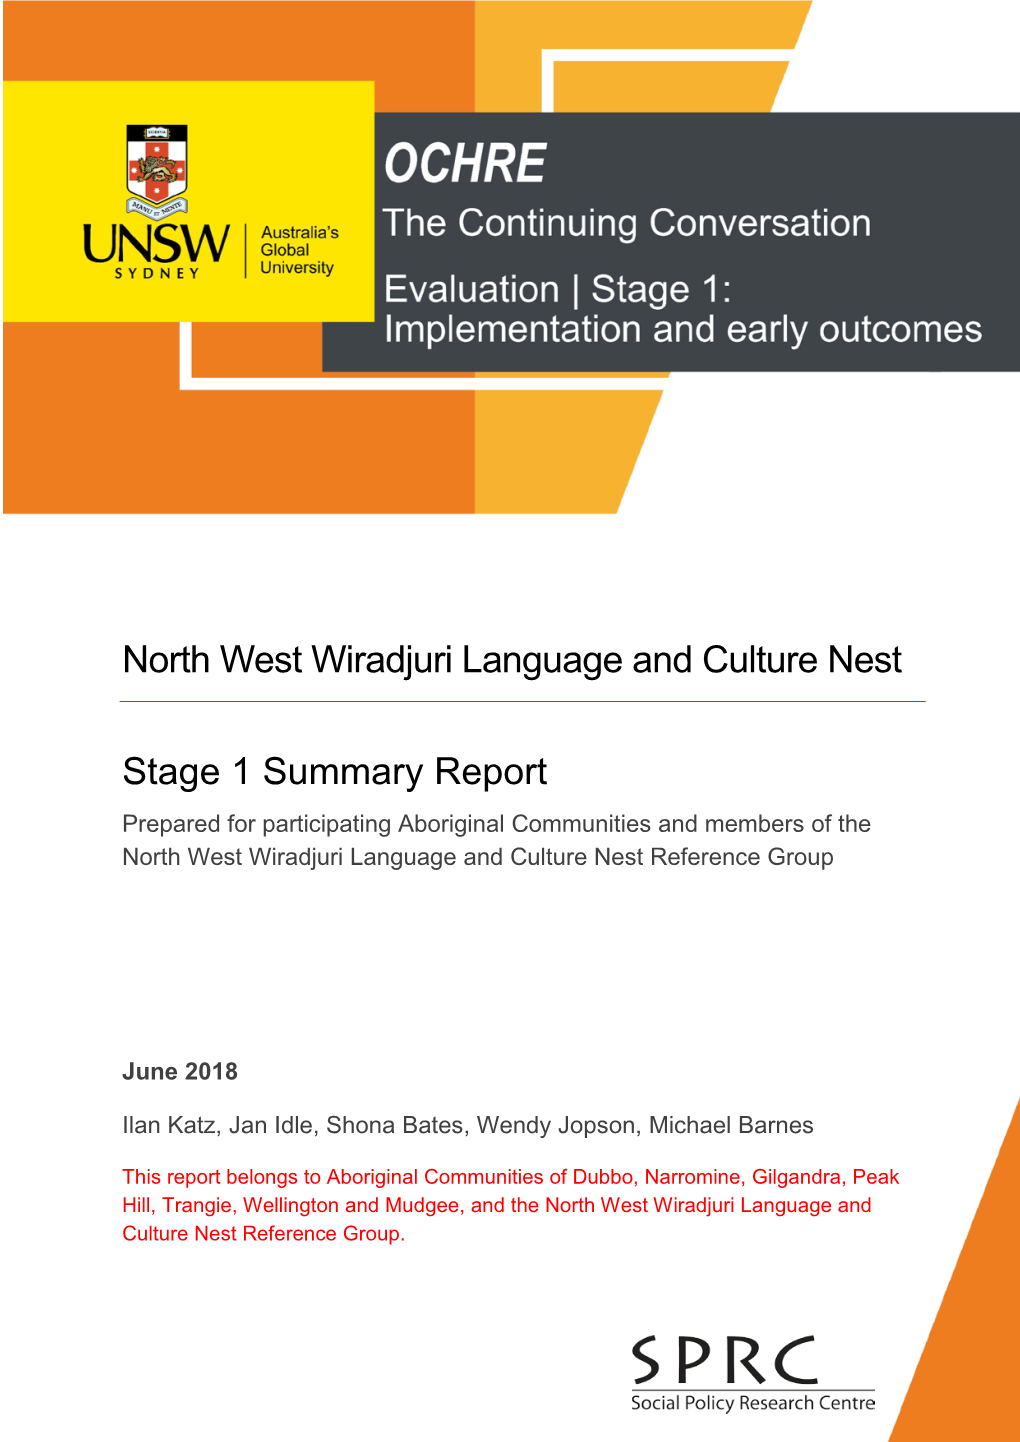 North West Wiradjuri Language and Culture Nest Stage 1 Summary